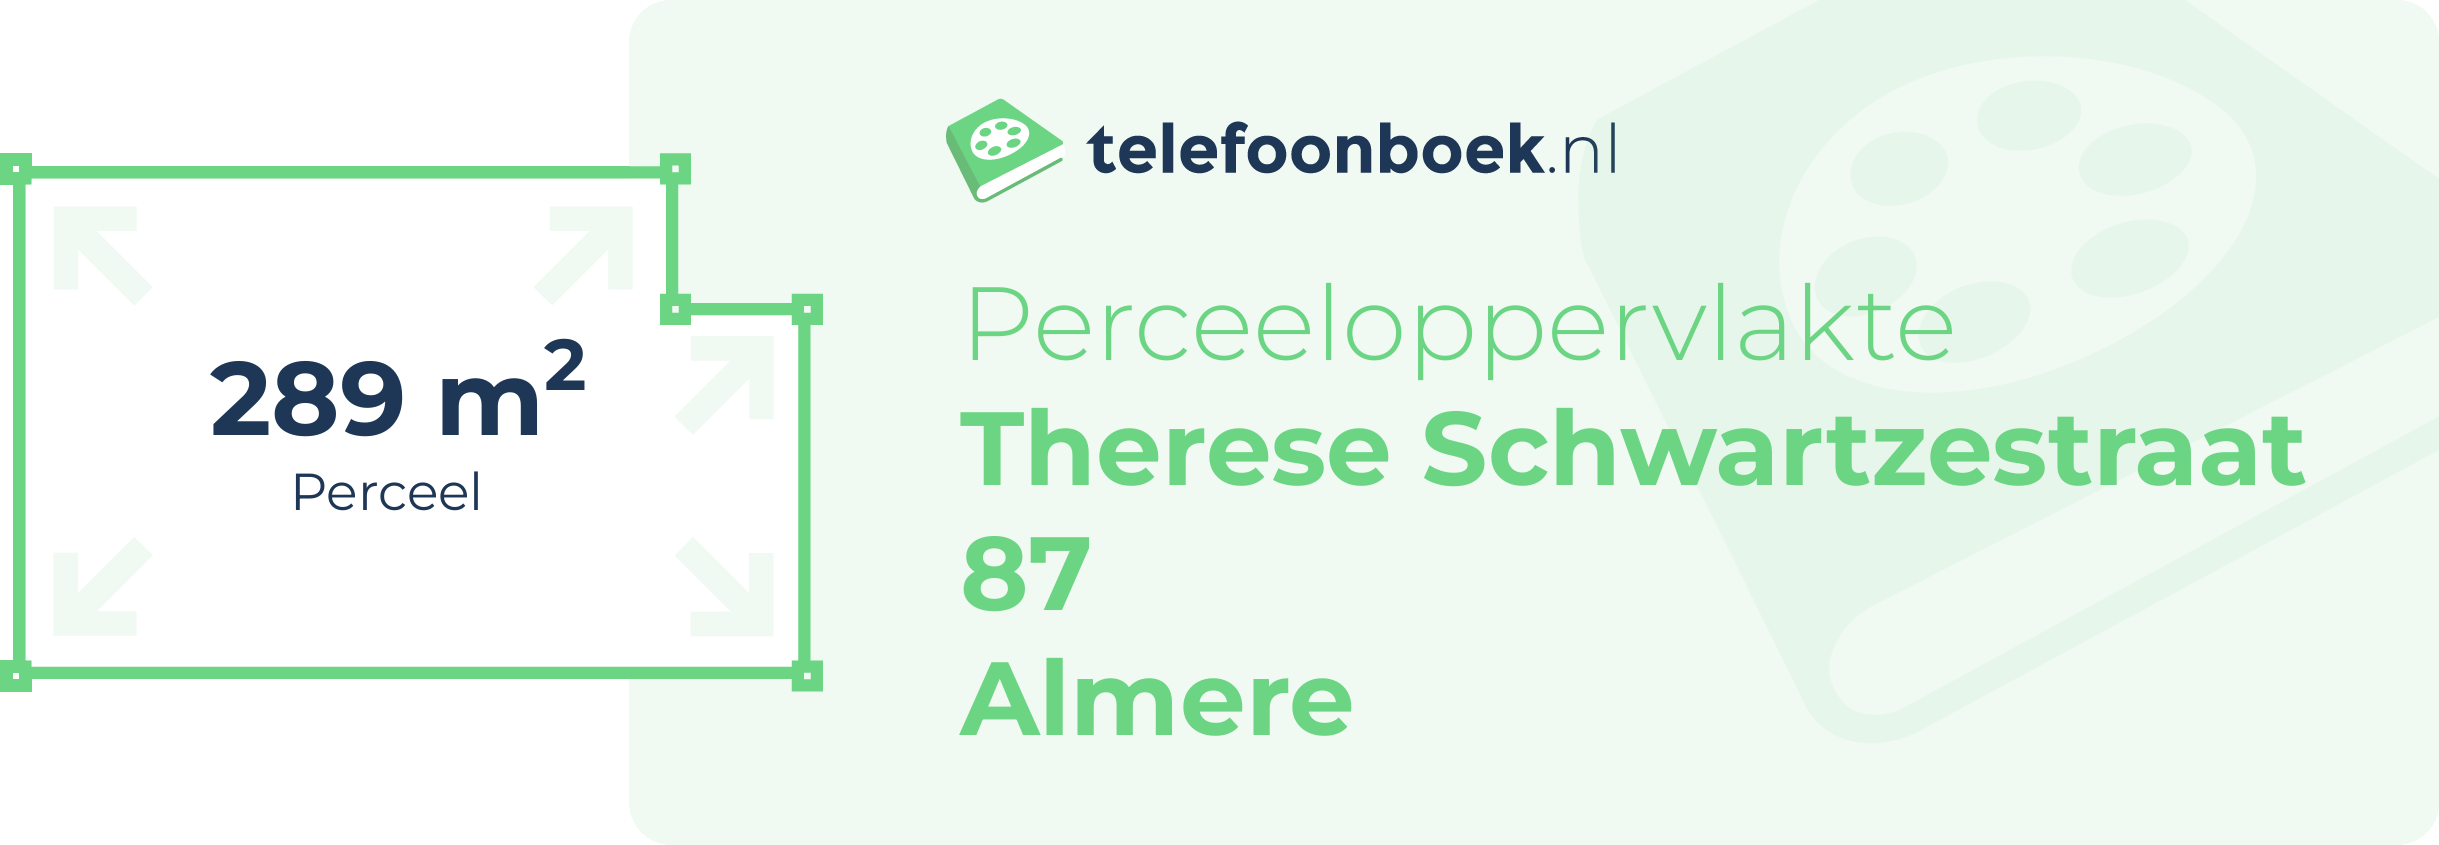 Perceeloppervlakte Therese Schwartzestraat 87 Almere